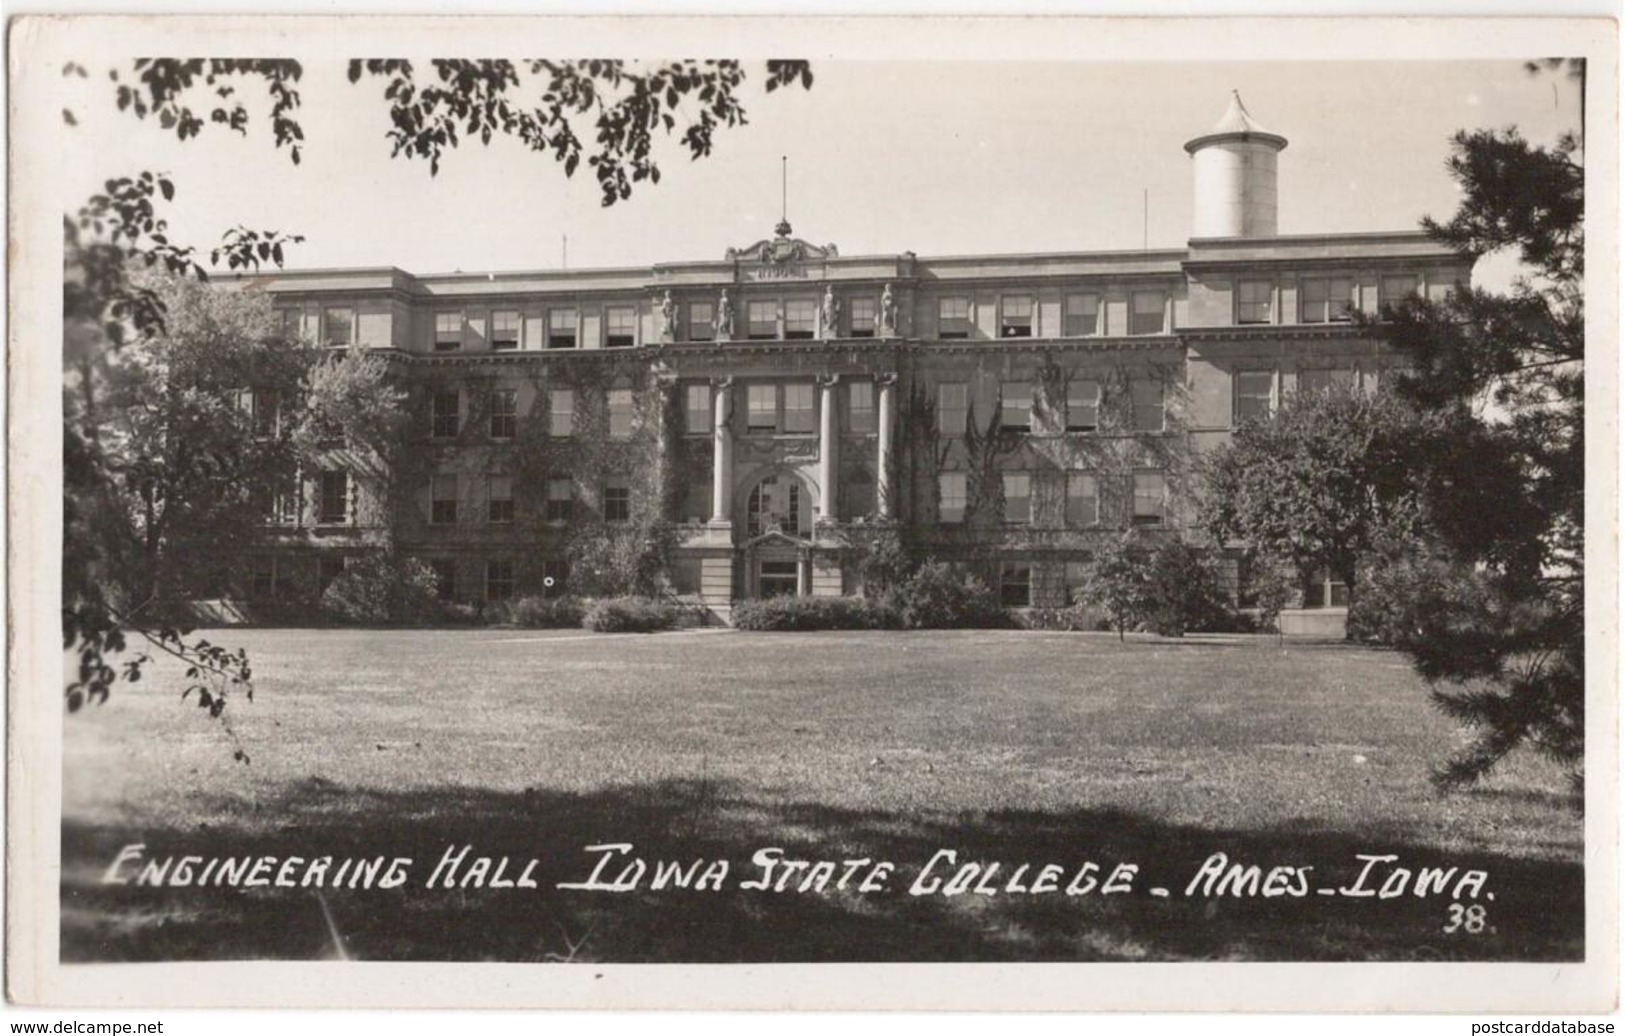 Engineering Hall Iowa State College - Ames - Iowa - Ames